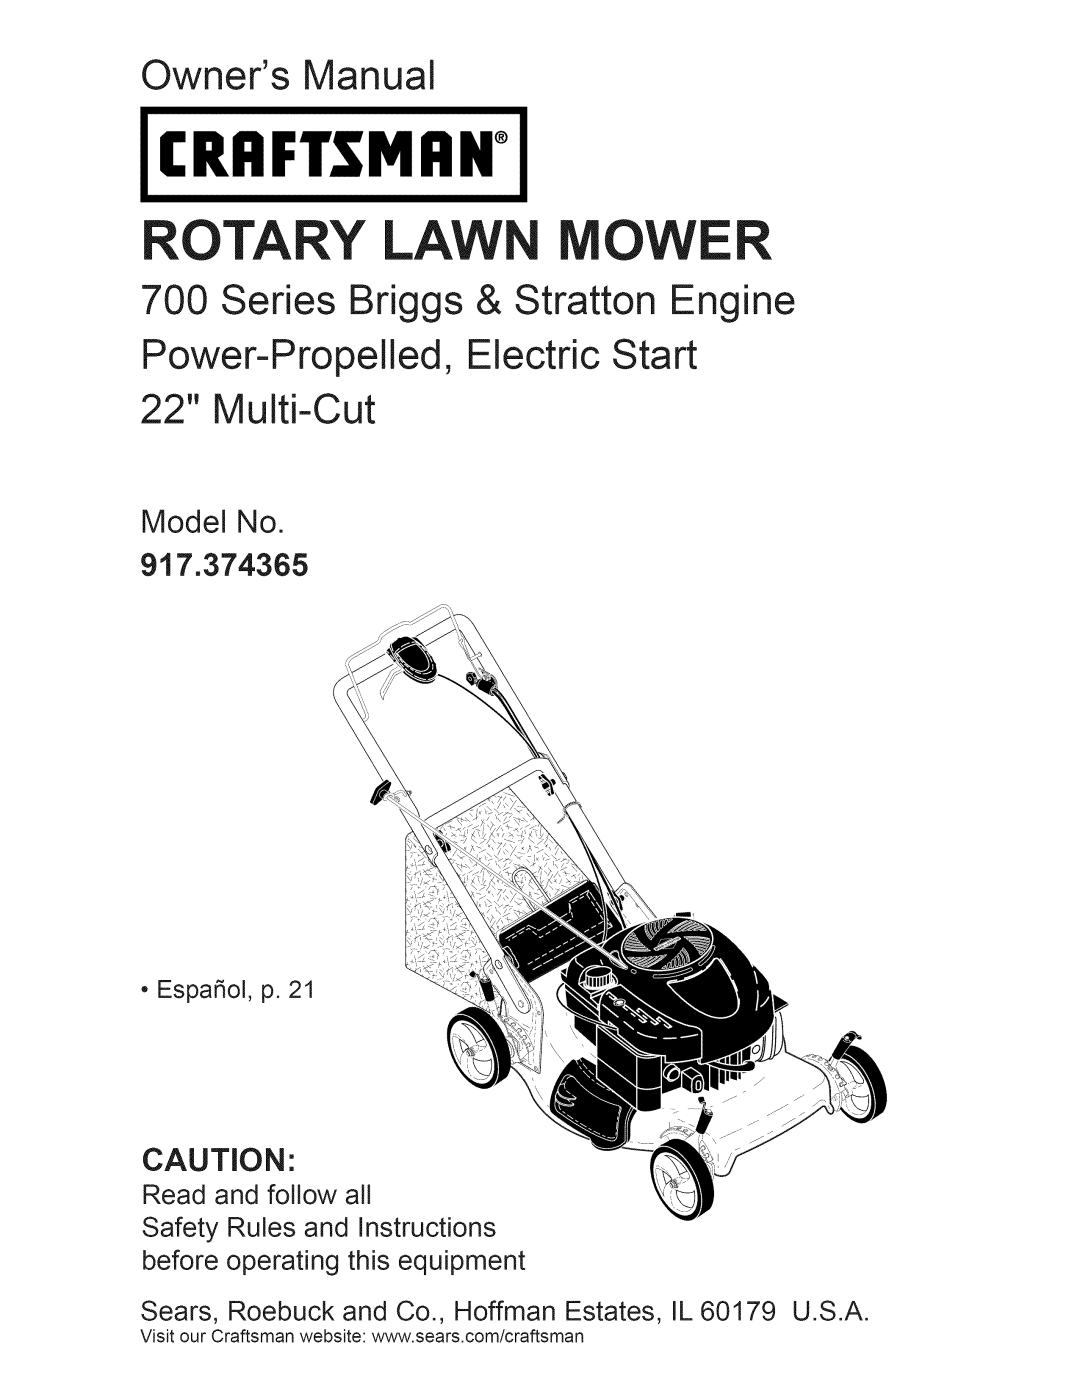 Craftsman owner manual Model No 917.374365, Craftsman, Rotary Lawn Mower, Owners Manual 